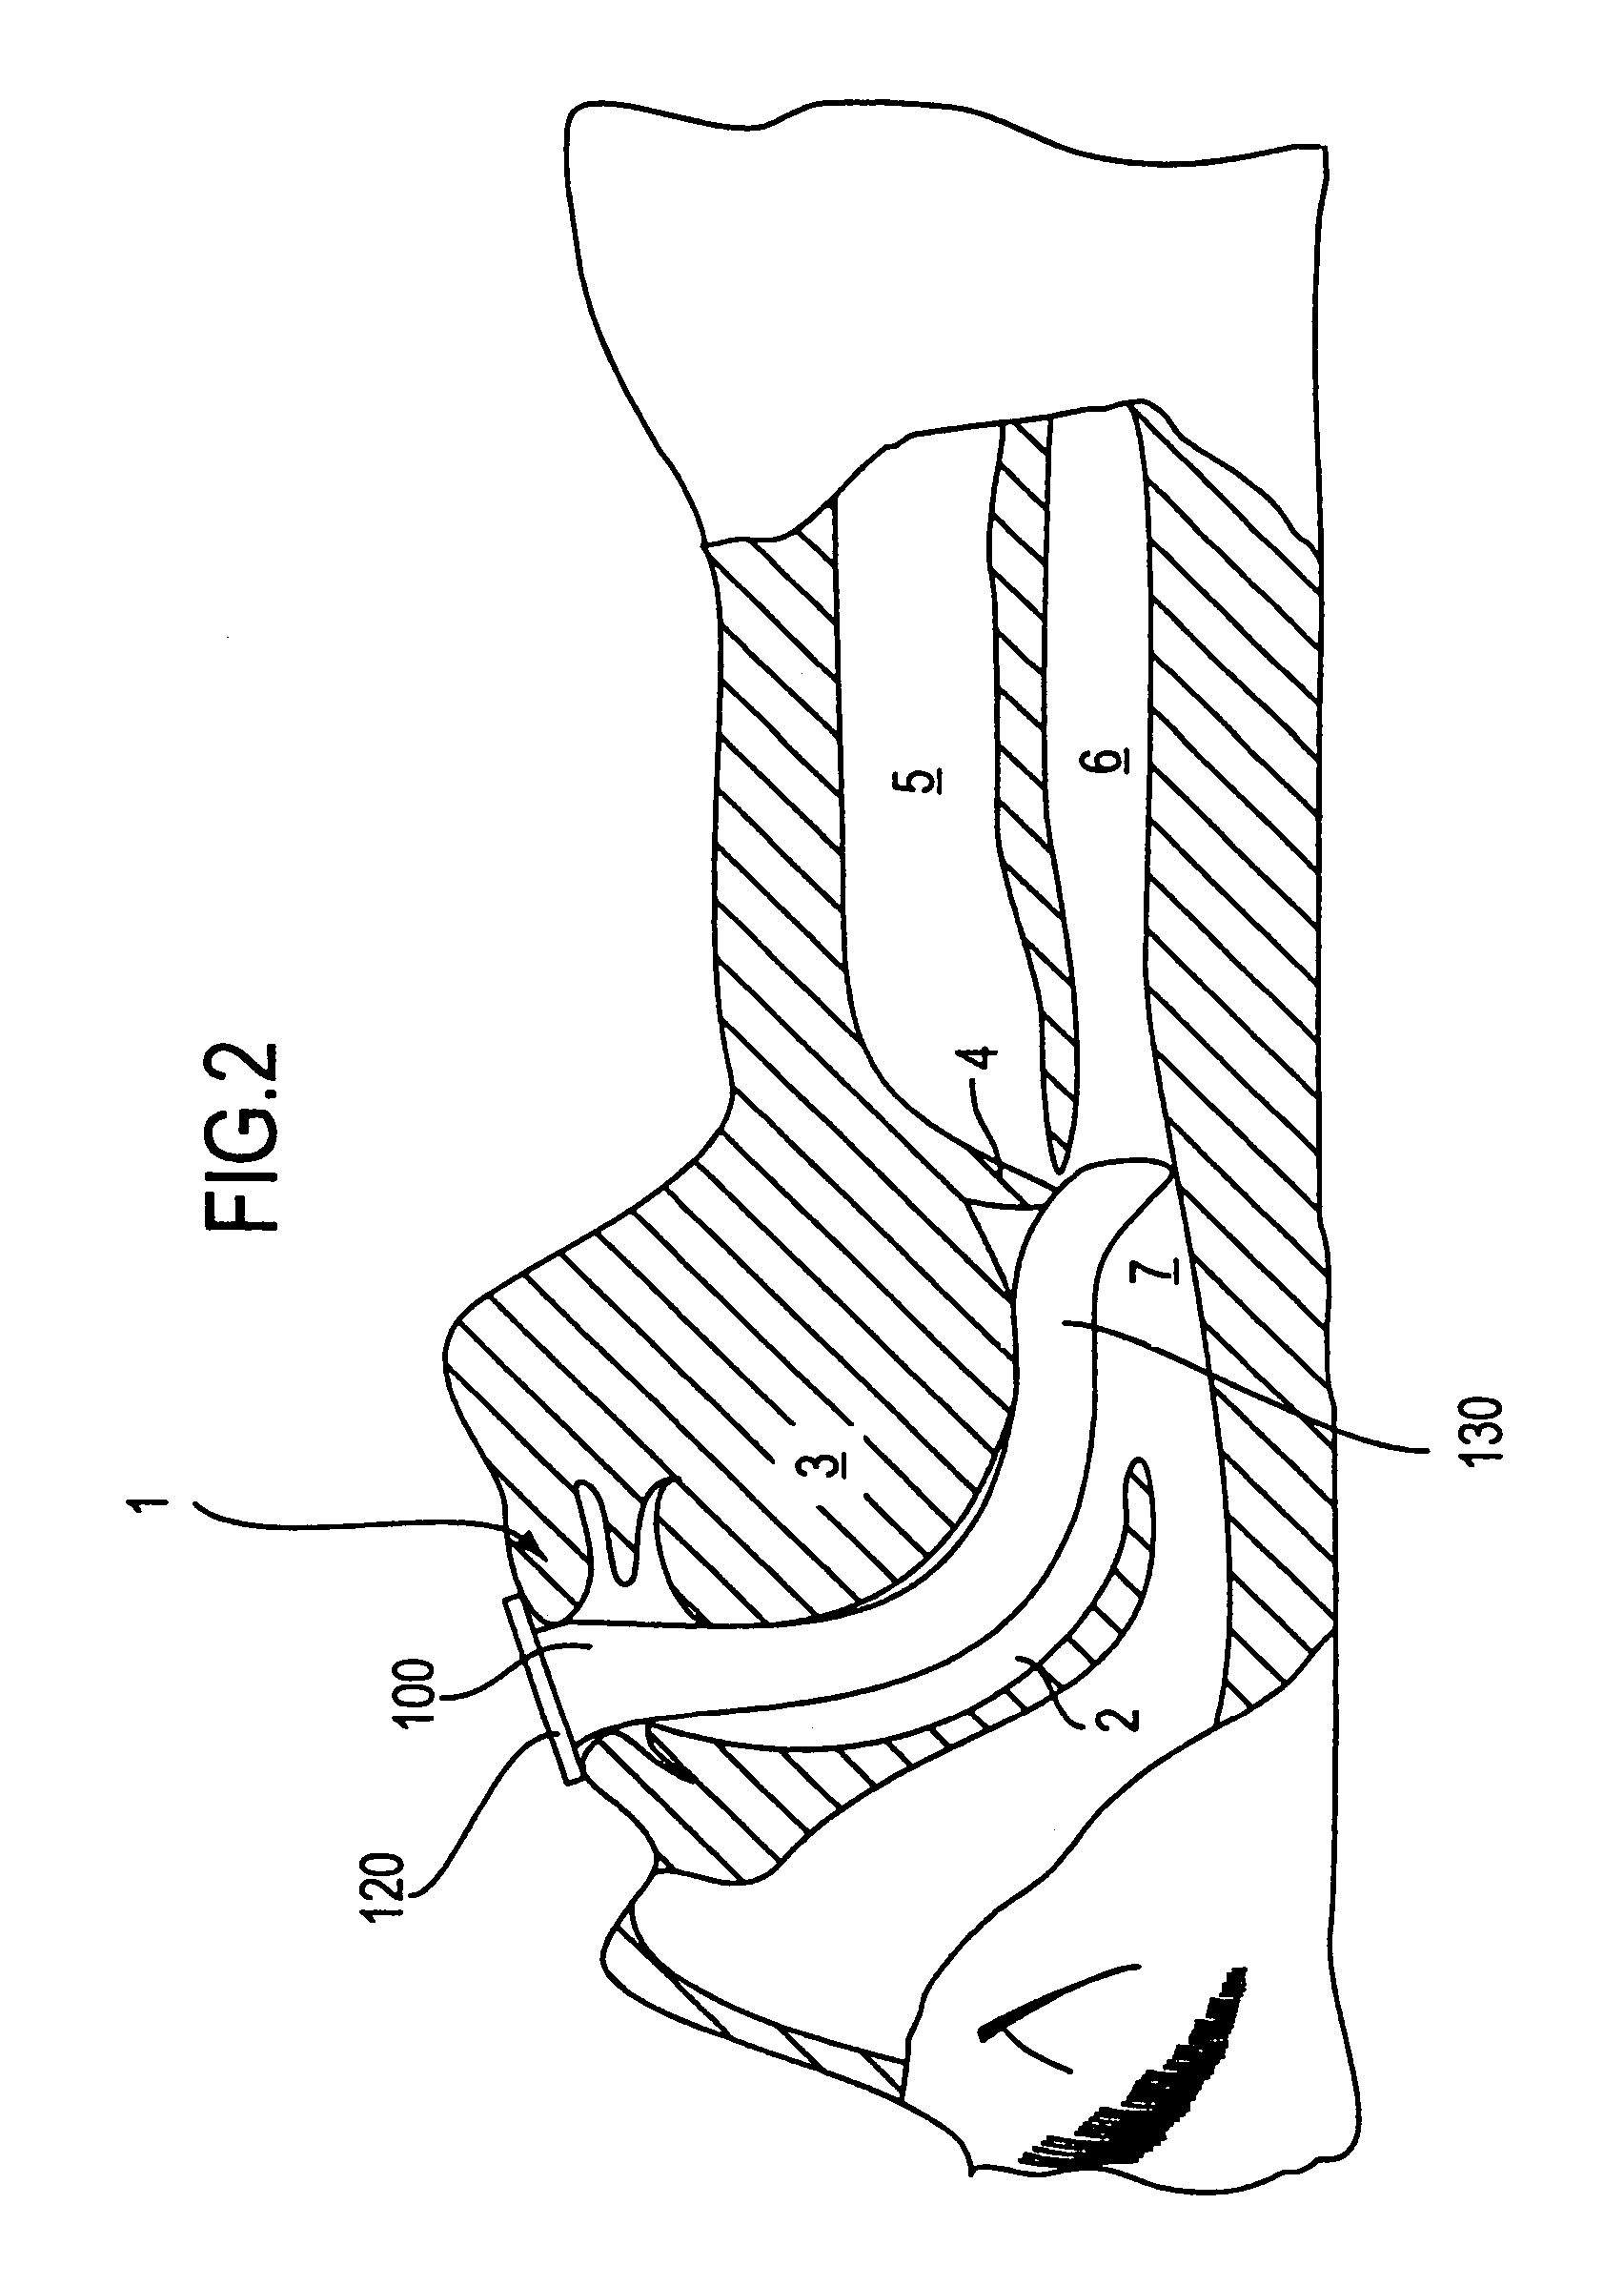 Perilaryngeal oral airway with temperature sensor